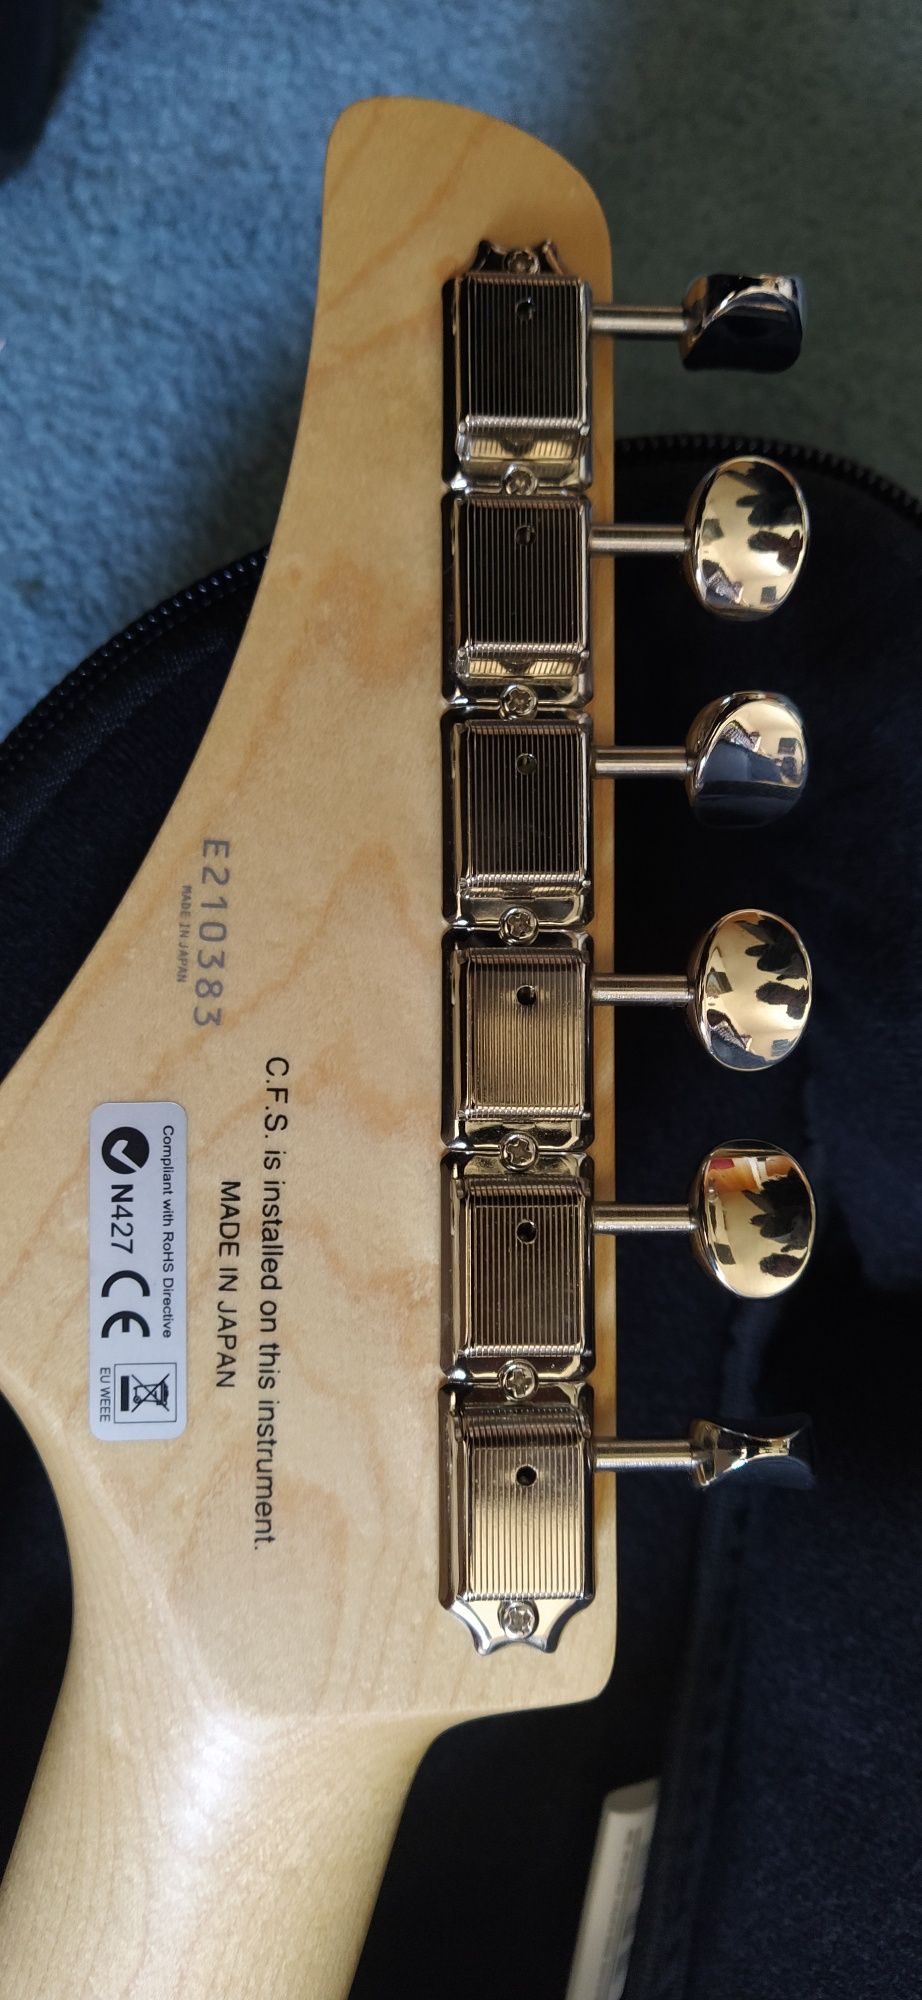 Guitarra Fujigen telecaster boundary iliad sapphire blue metallic